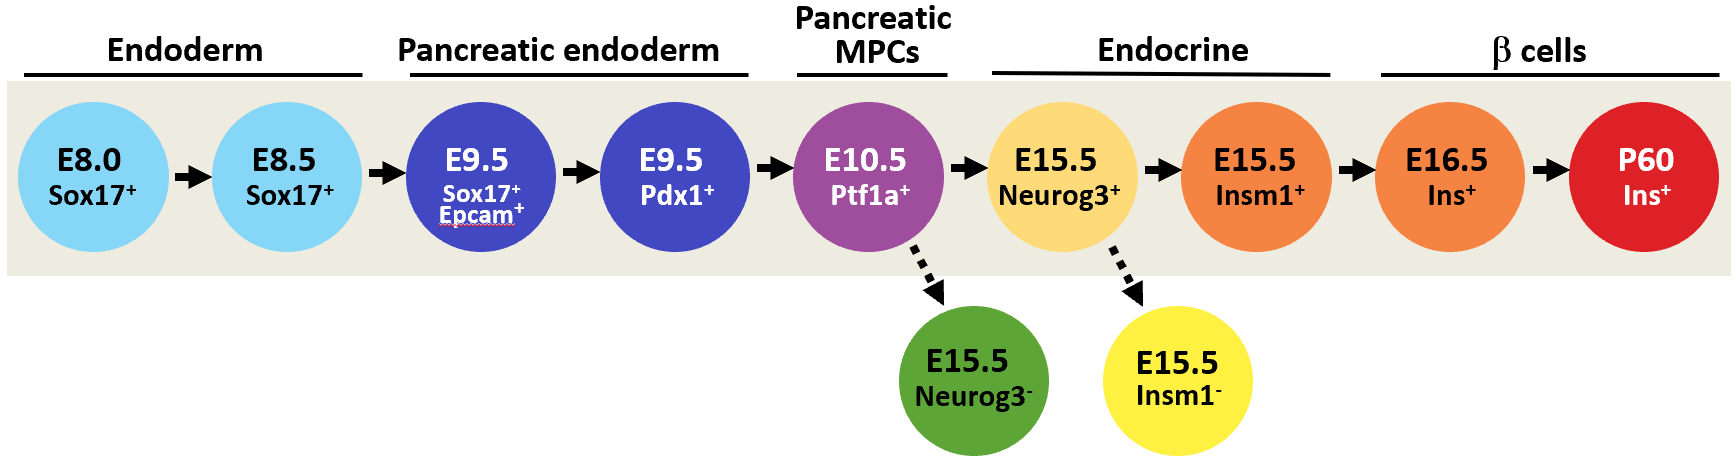 Mouse Pancreas Developmental Network - Osipovich et al